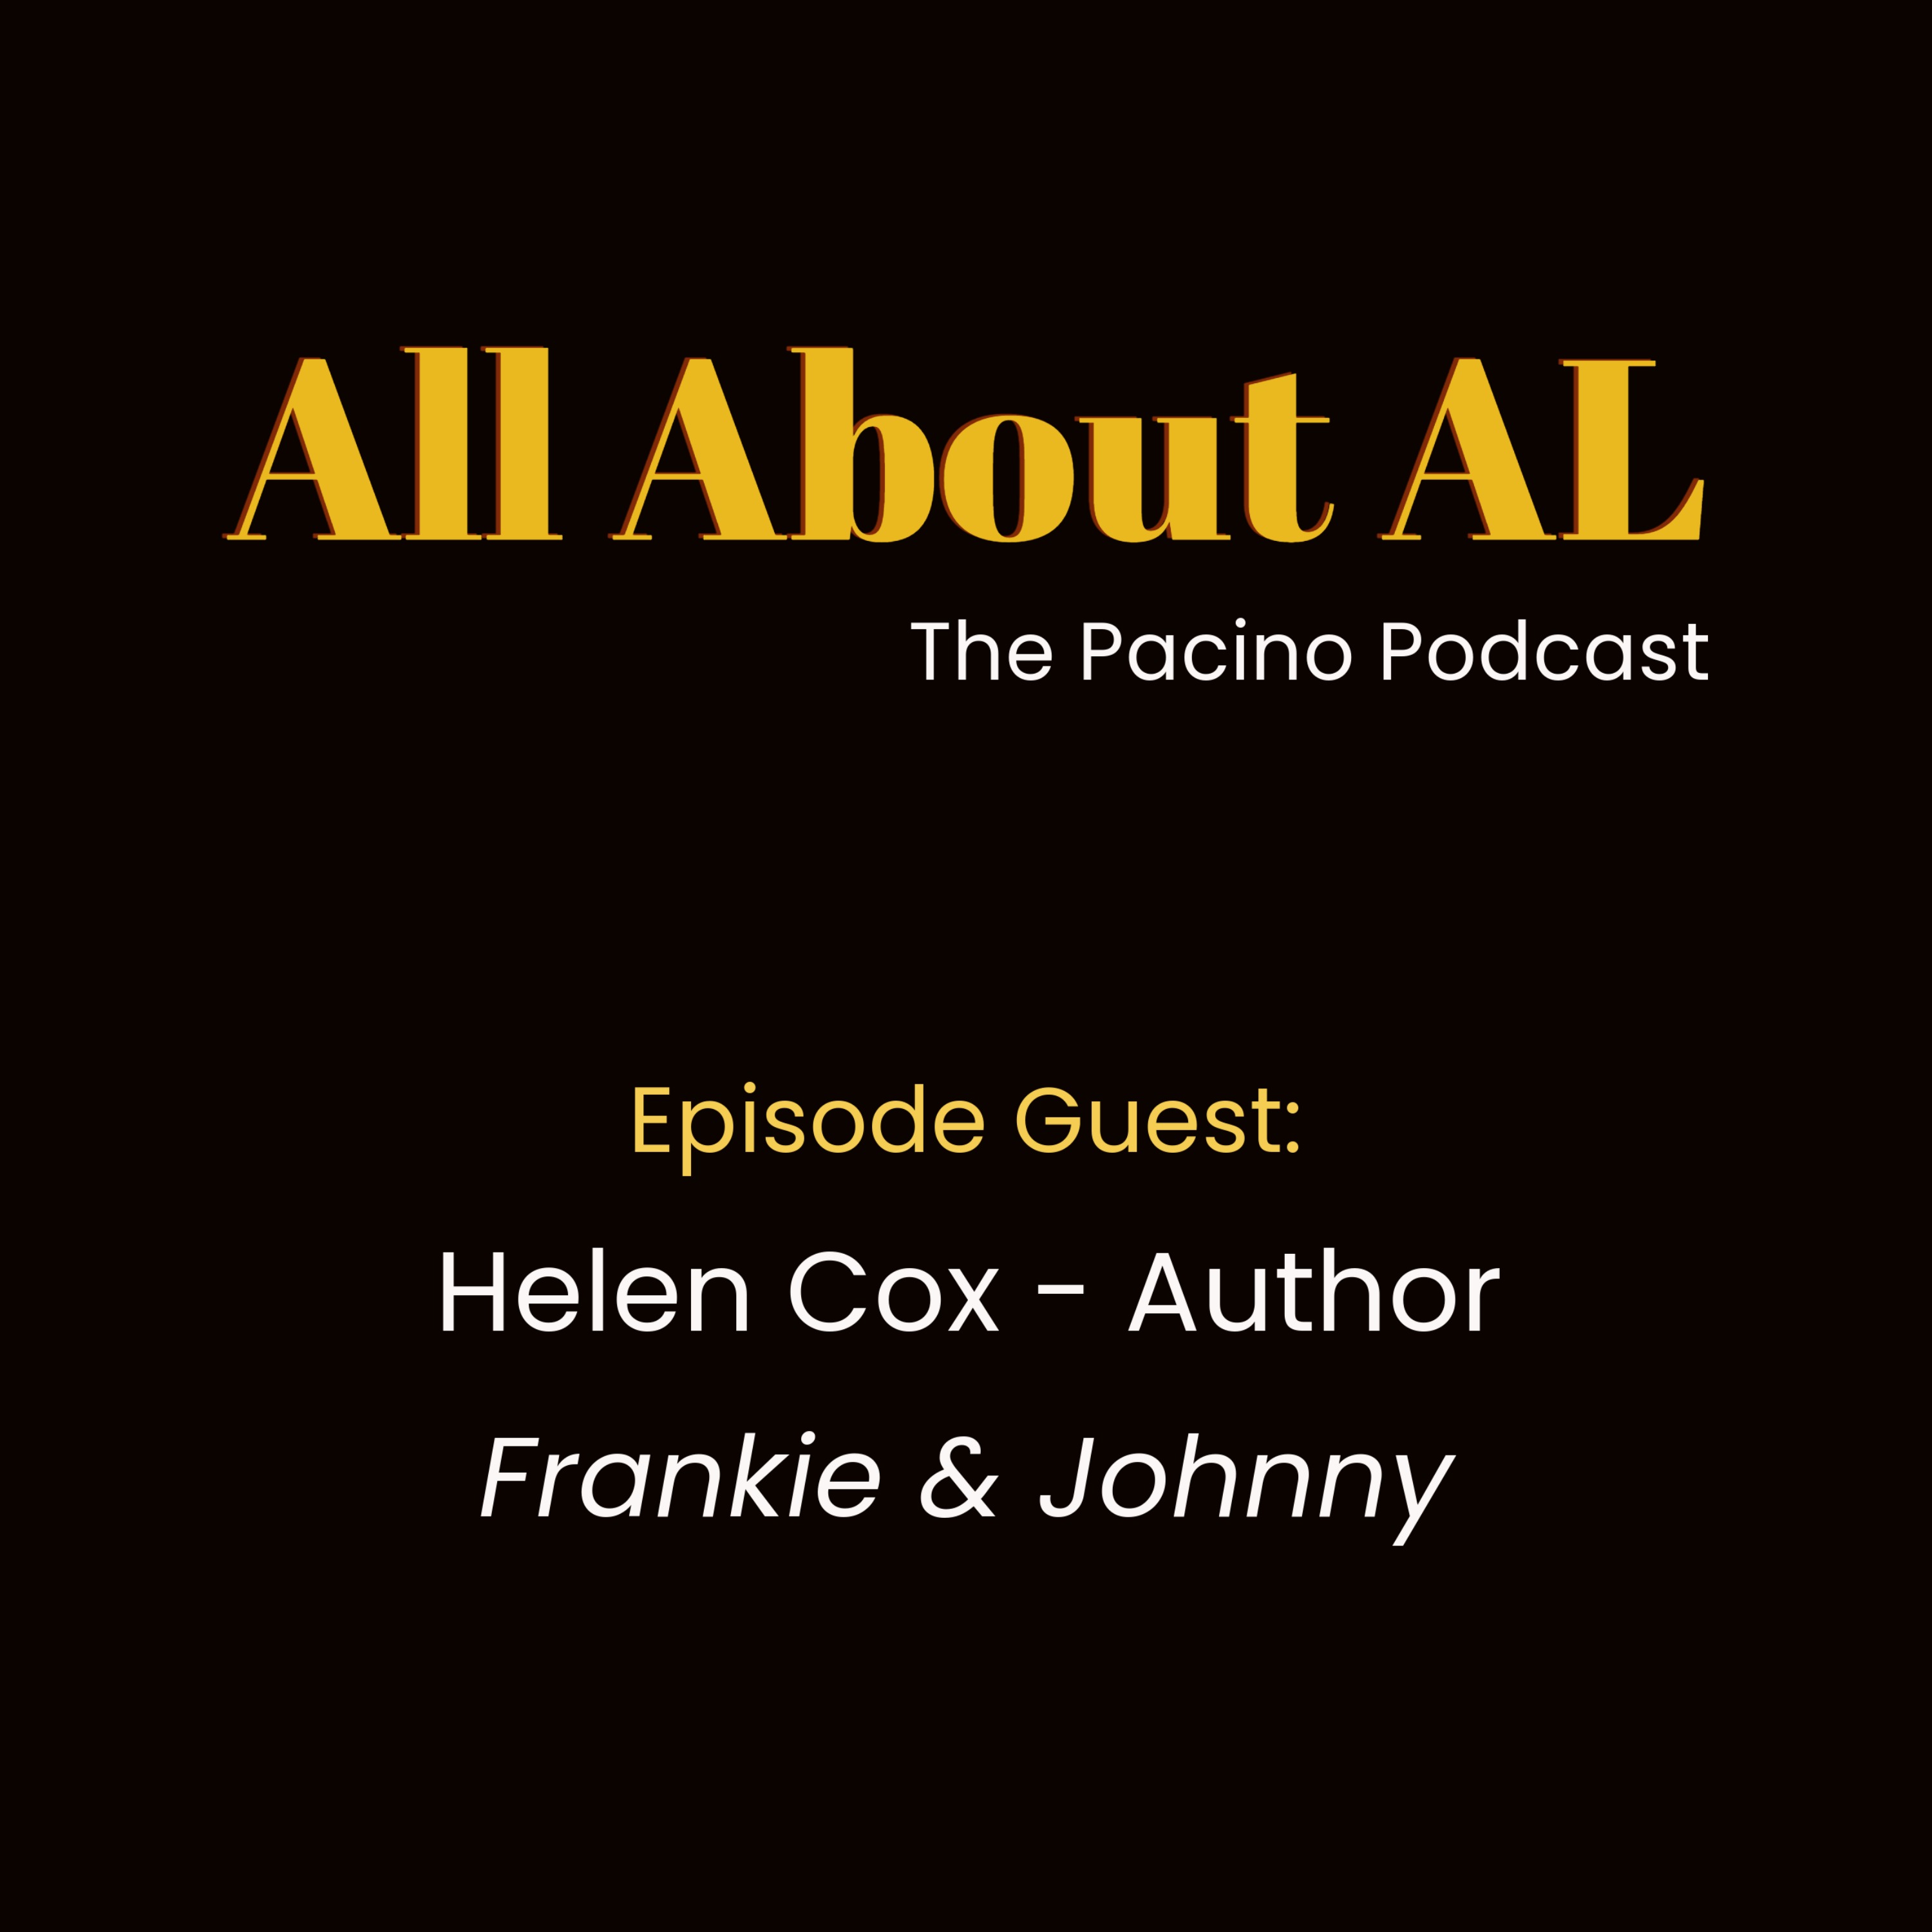 Episode 11: Frankie & Johnny with Helen Cox